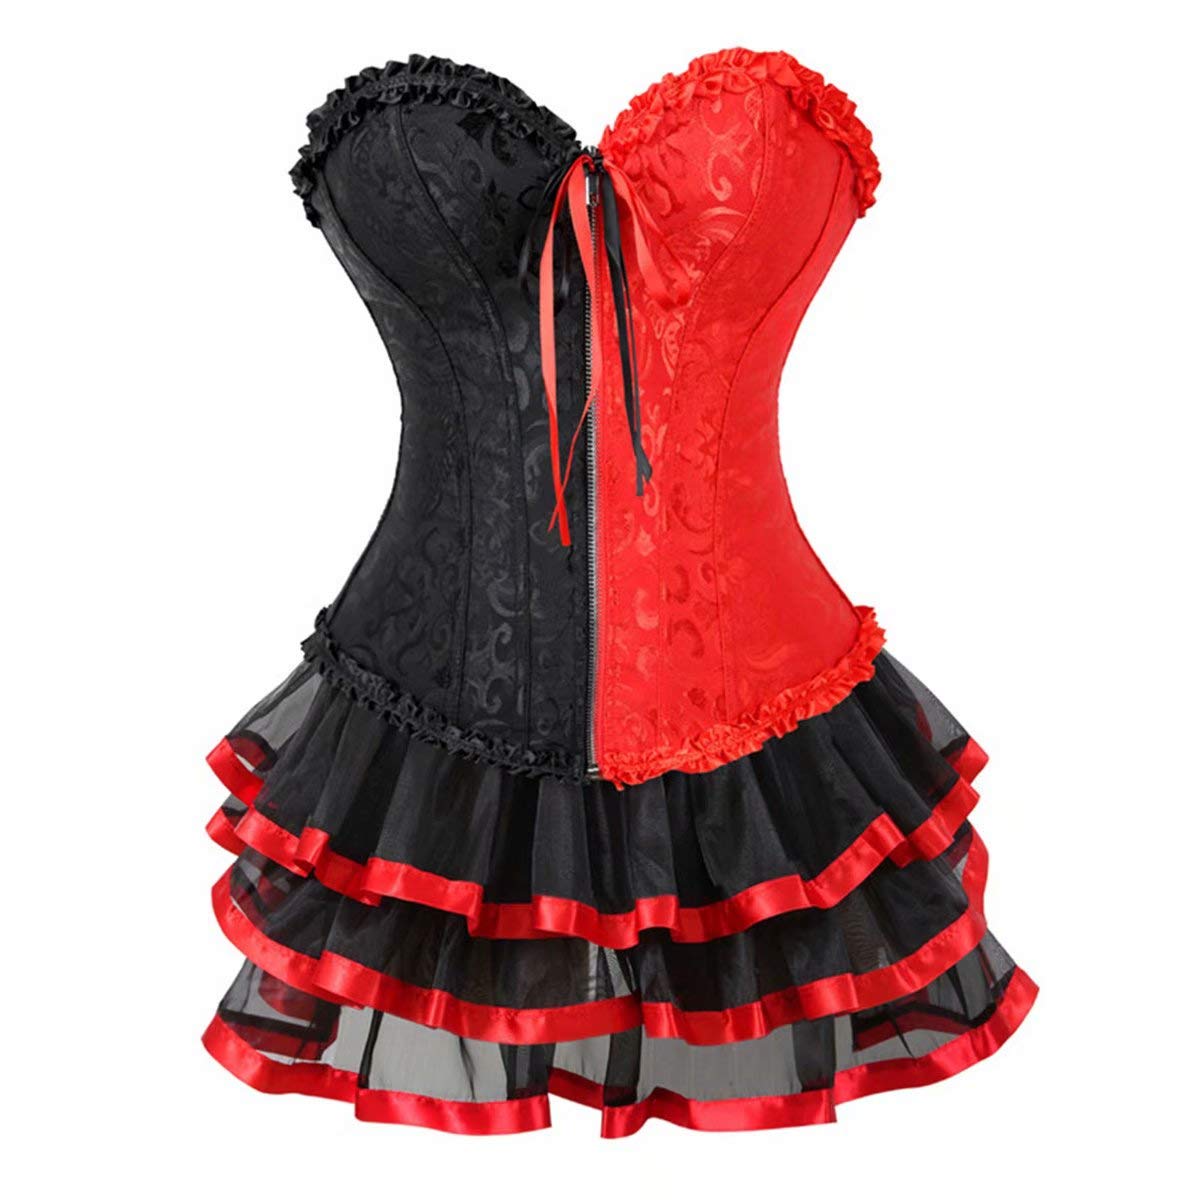 Josamogre Corsagenkleid Gothic vollbrust korsett Kleid tutu elegant rock set Damen reissverschluss burlesque vintageSchwarz rot 4XL